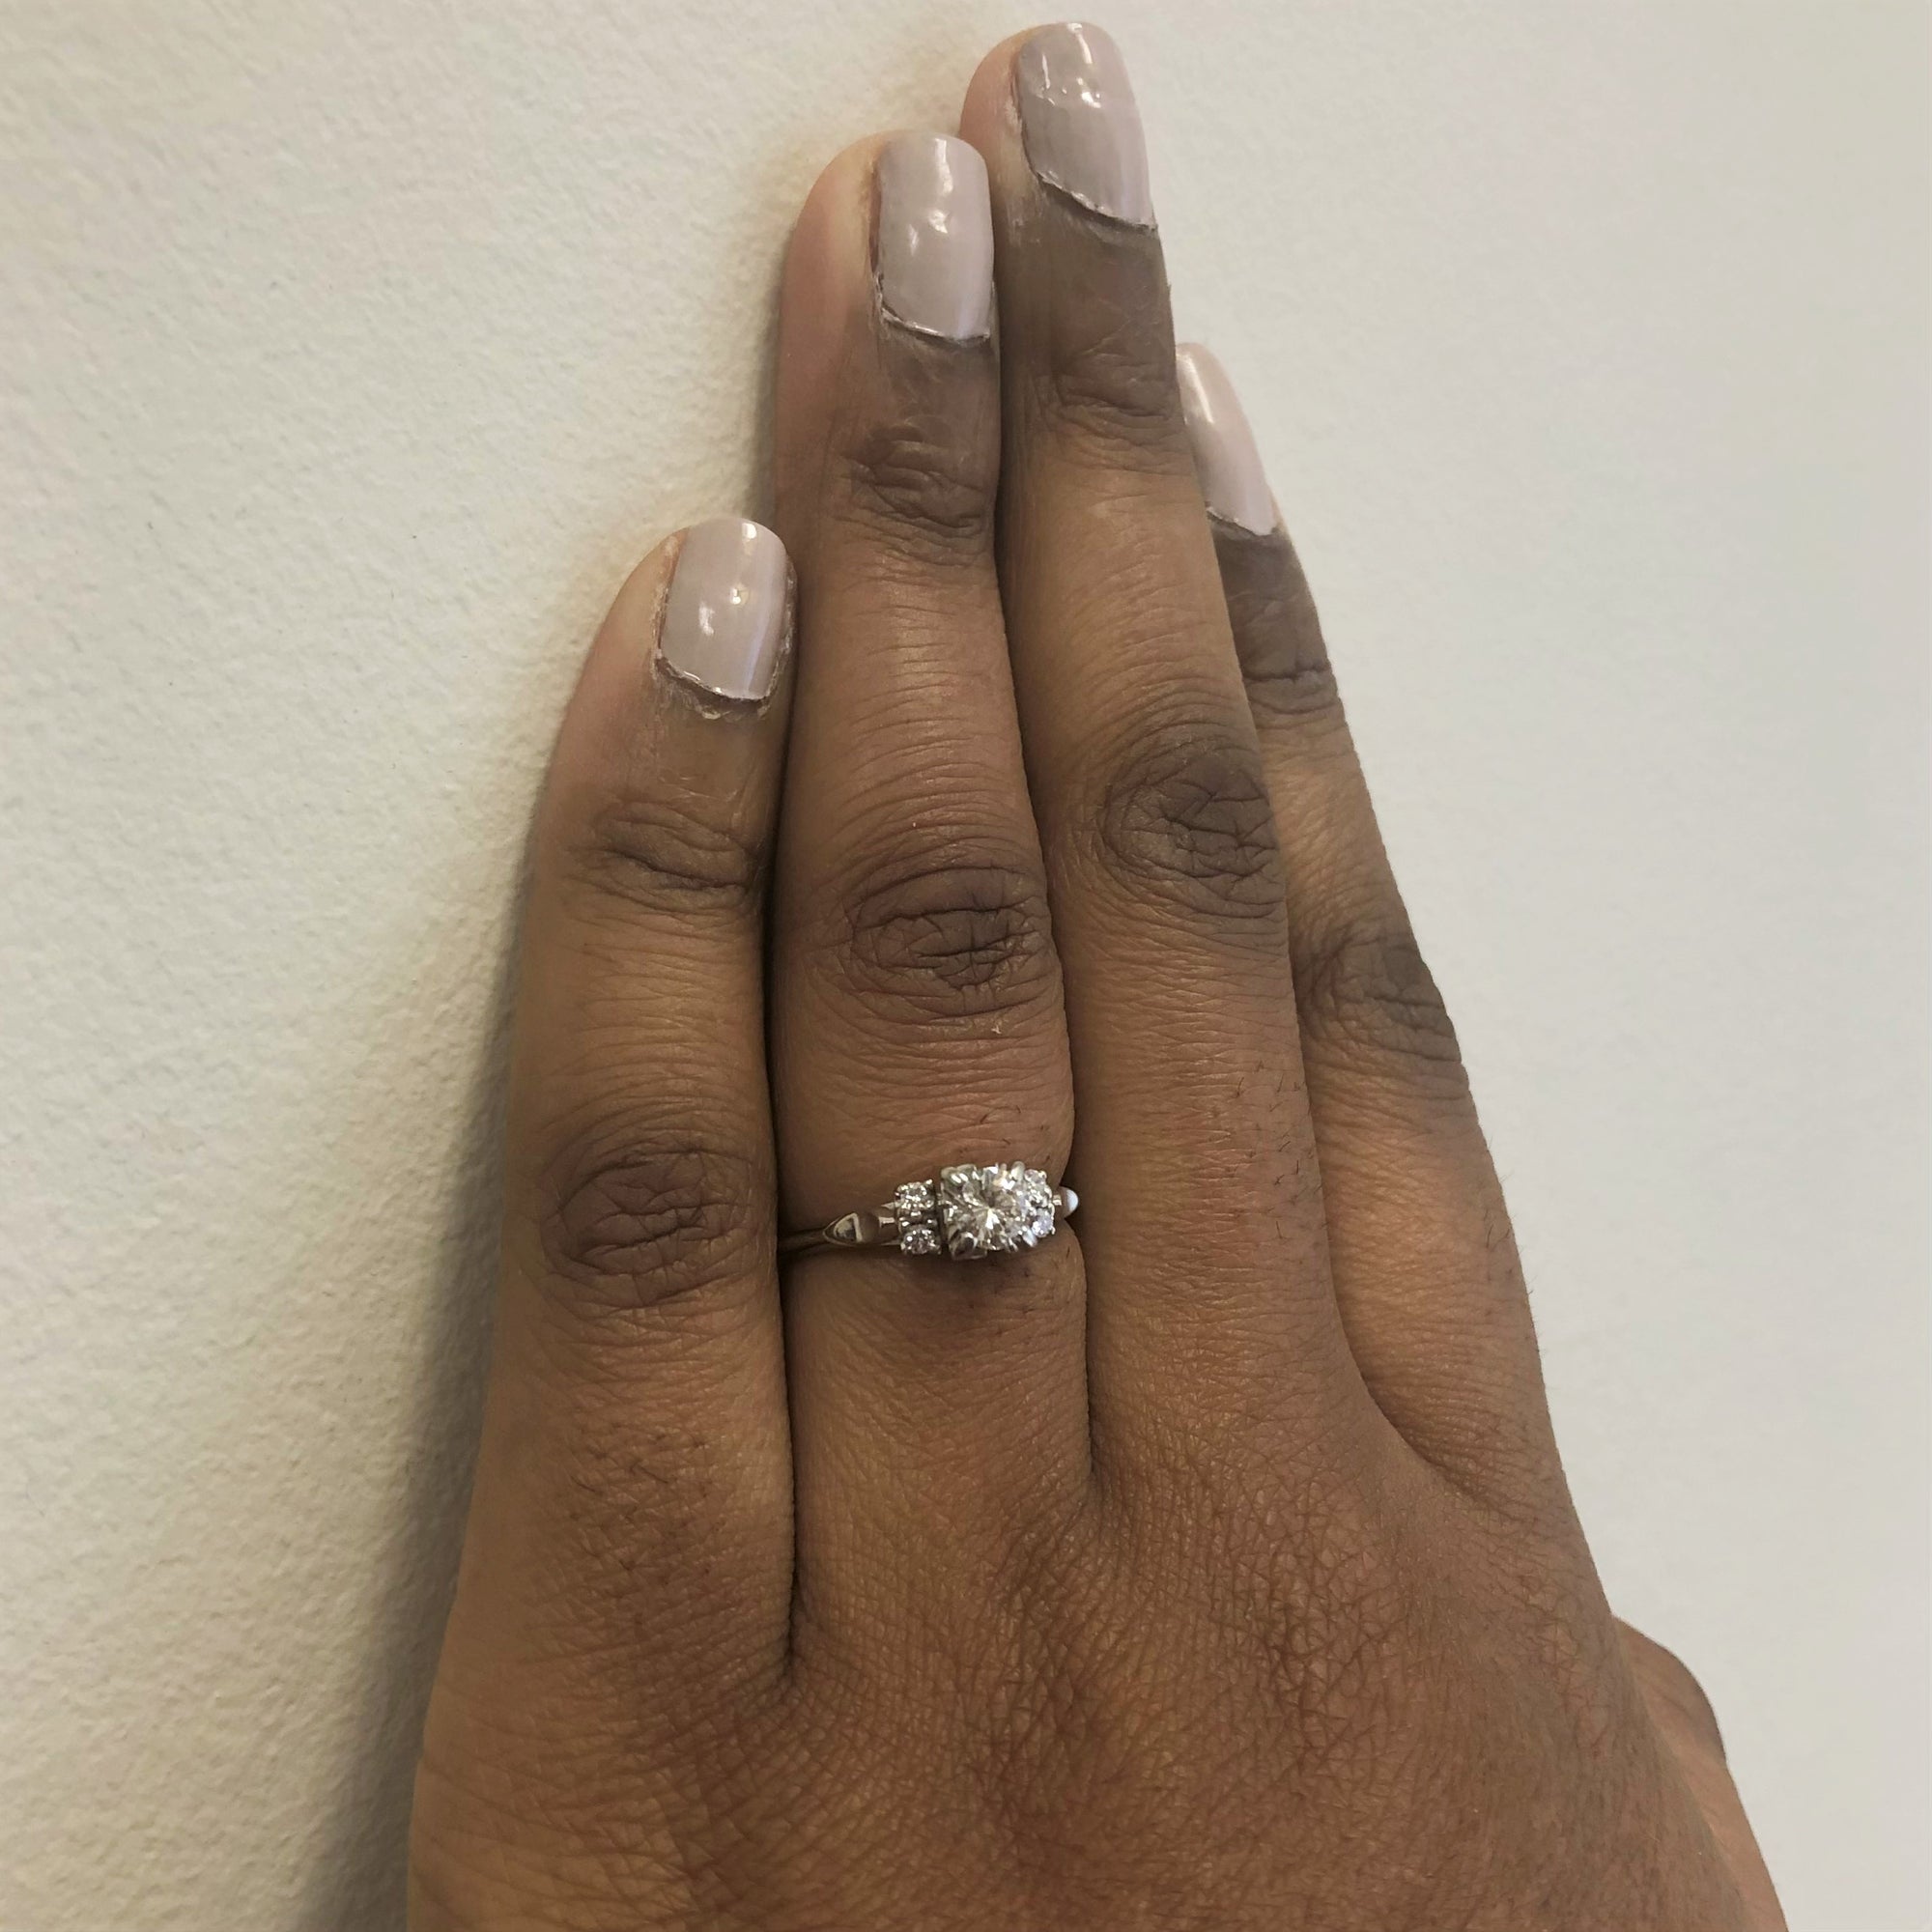 1940s Diamond Engagement Ring | 0.48ctw | SZ 8.25 |